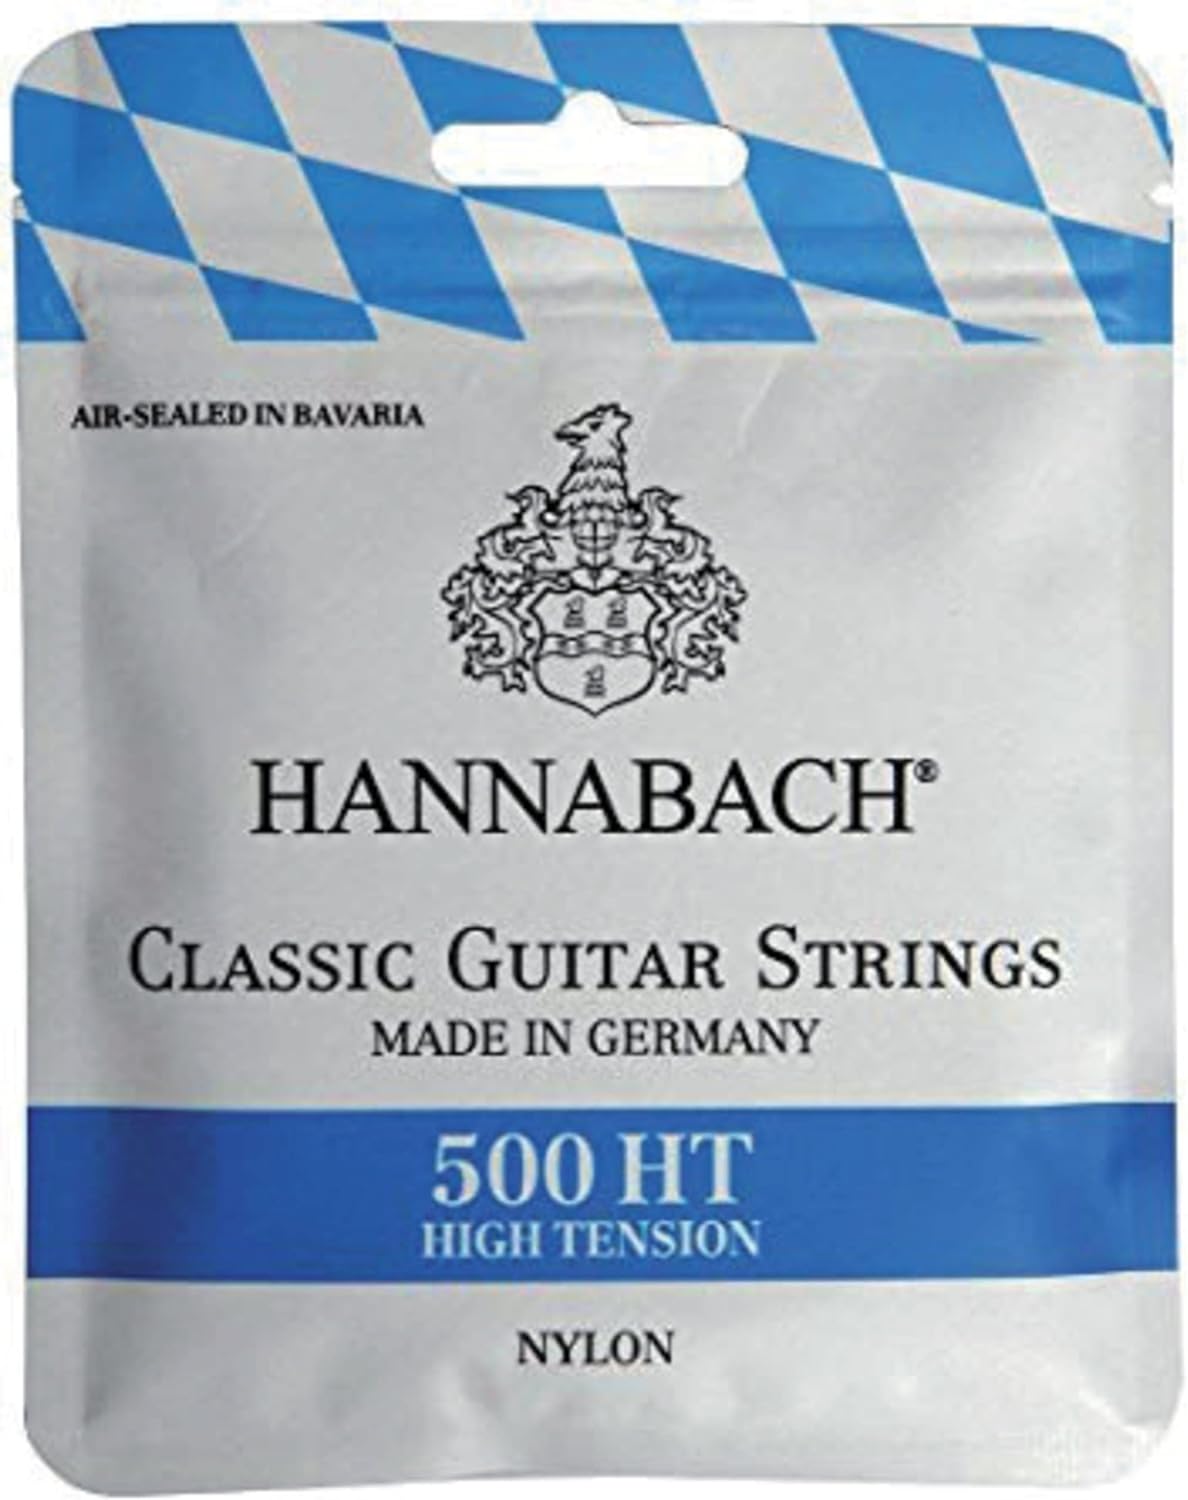 Hannabach 500HT Classical Guitar Strings - High Tension